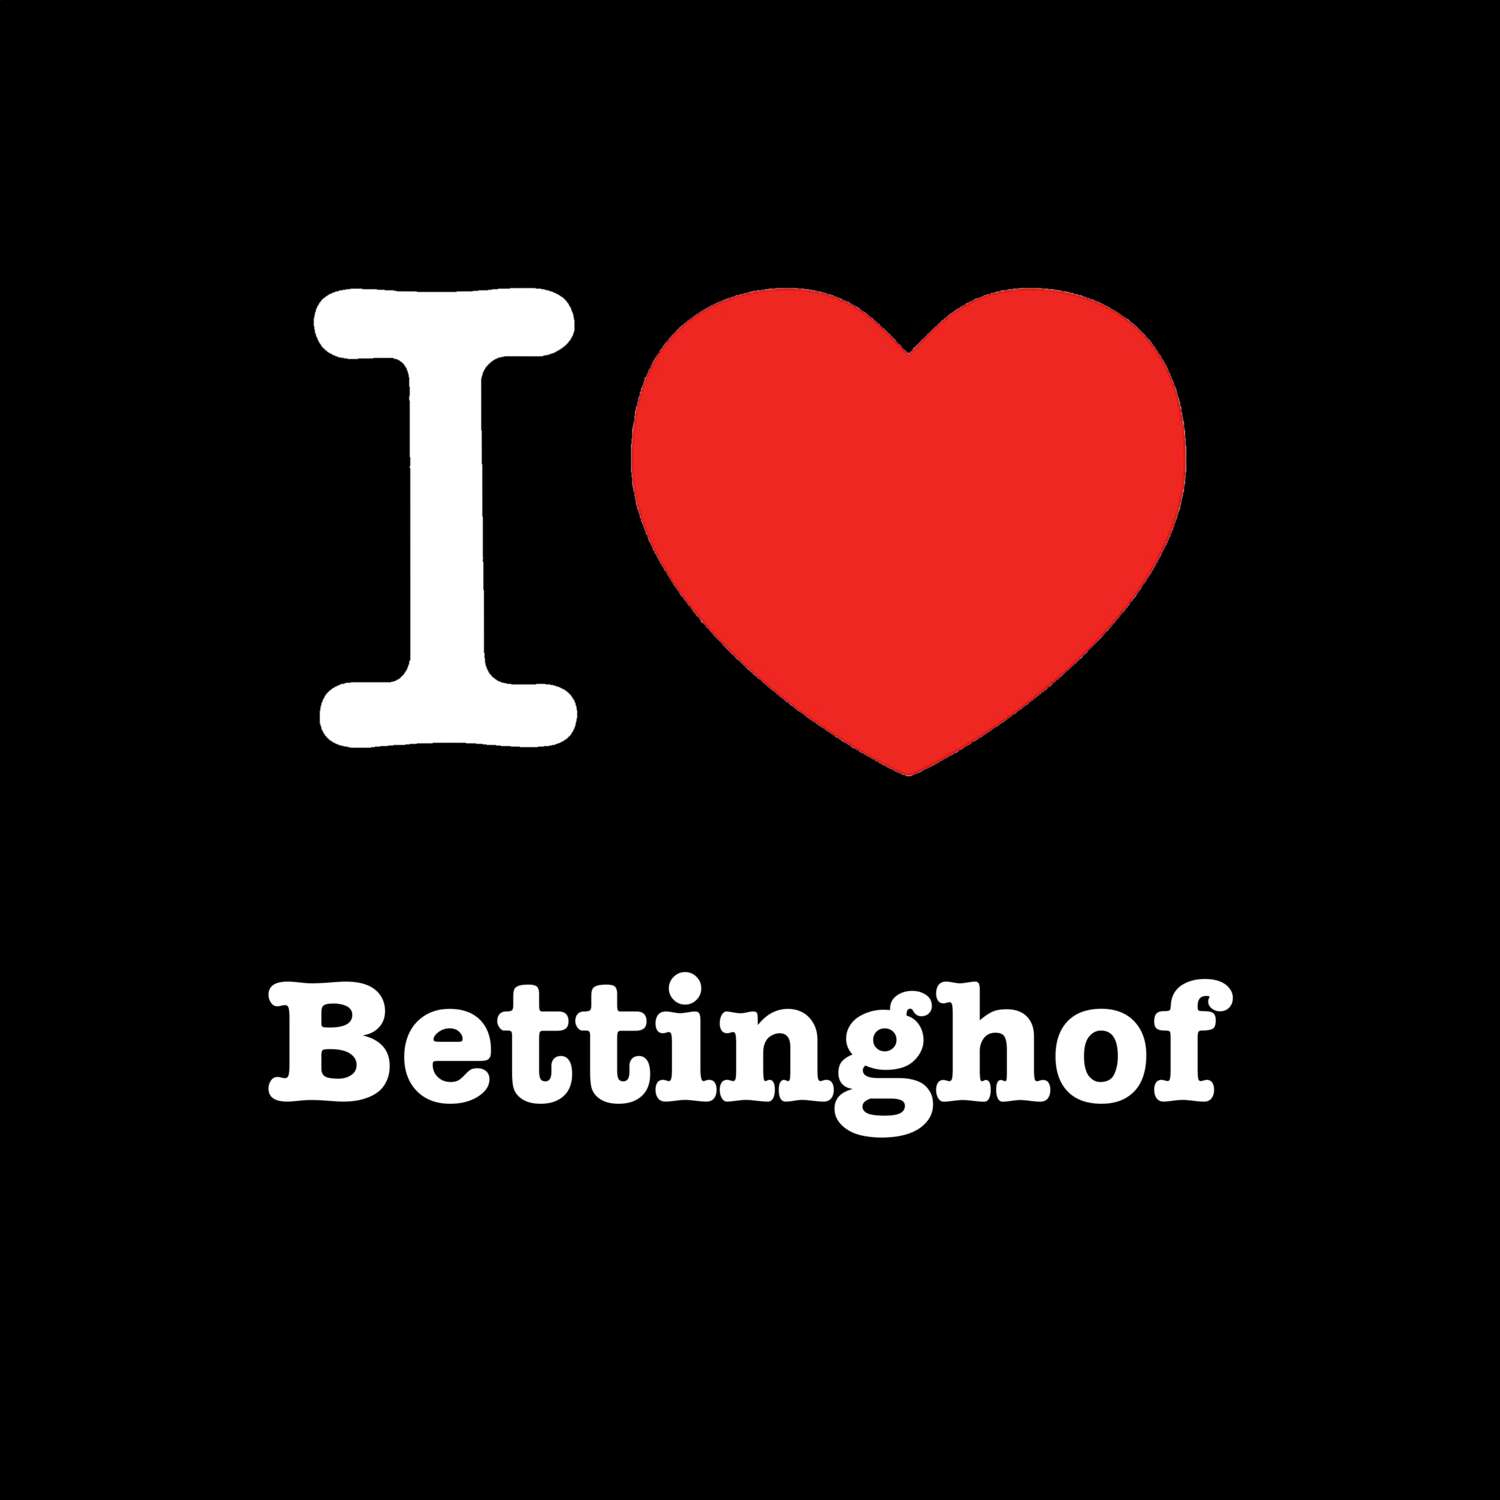 Bettinghof T-Shirt »I love«